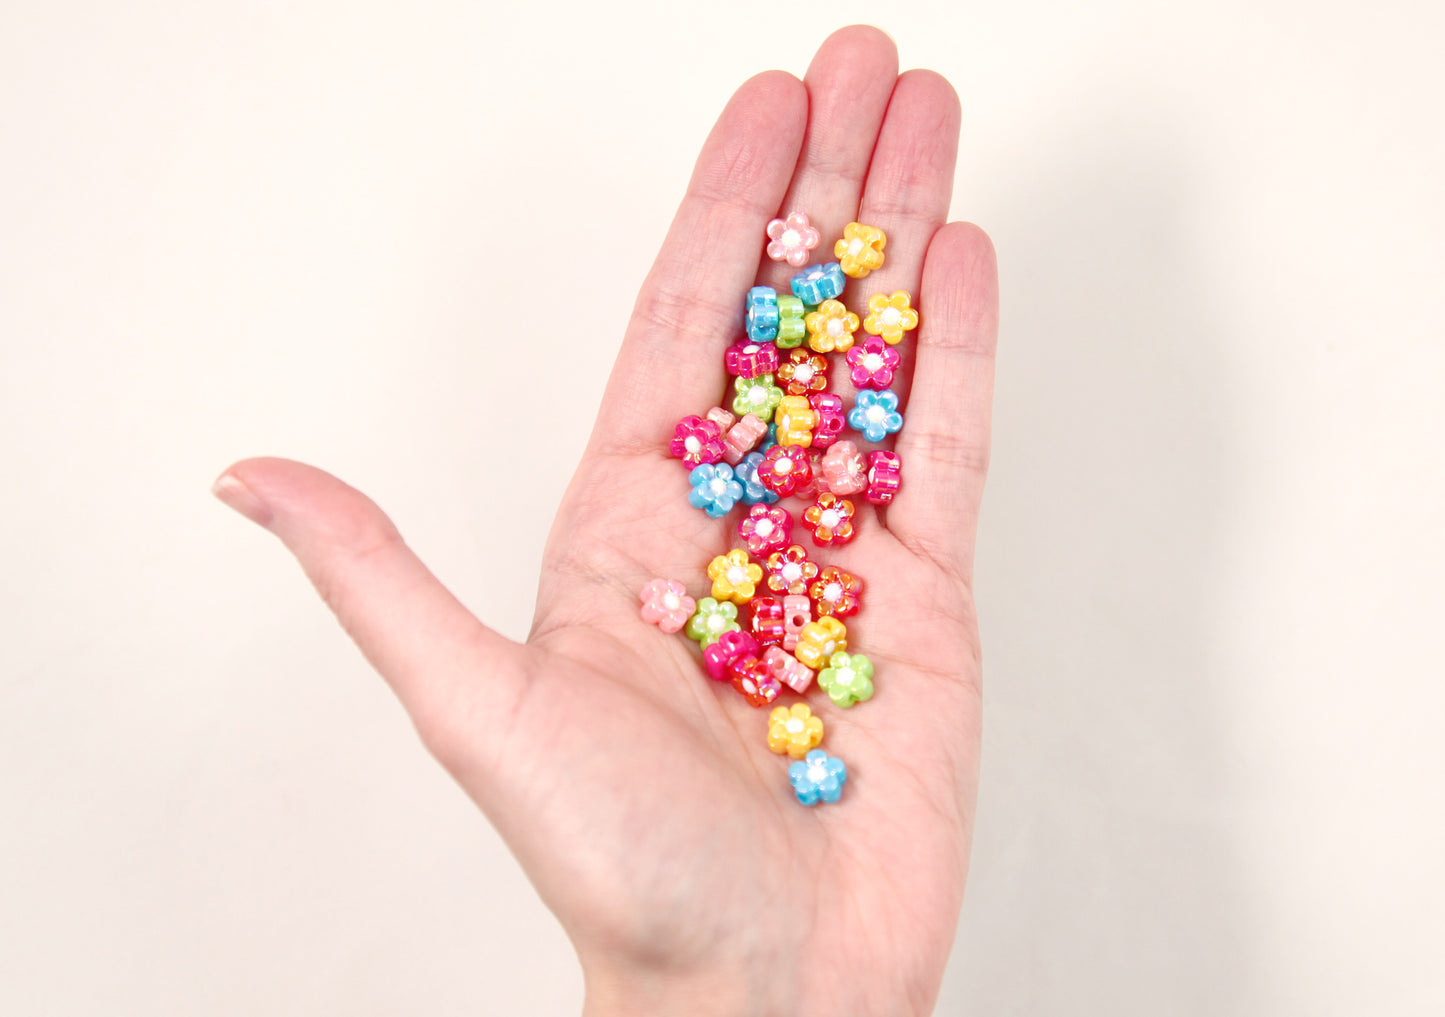 Flower Beads - 9mm Tiny Amazing AB Acrylic Flower Beads - Little Resin Flower Beads - 50 pc set